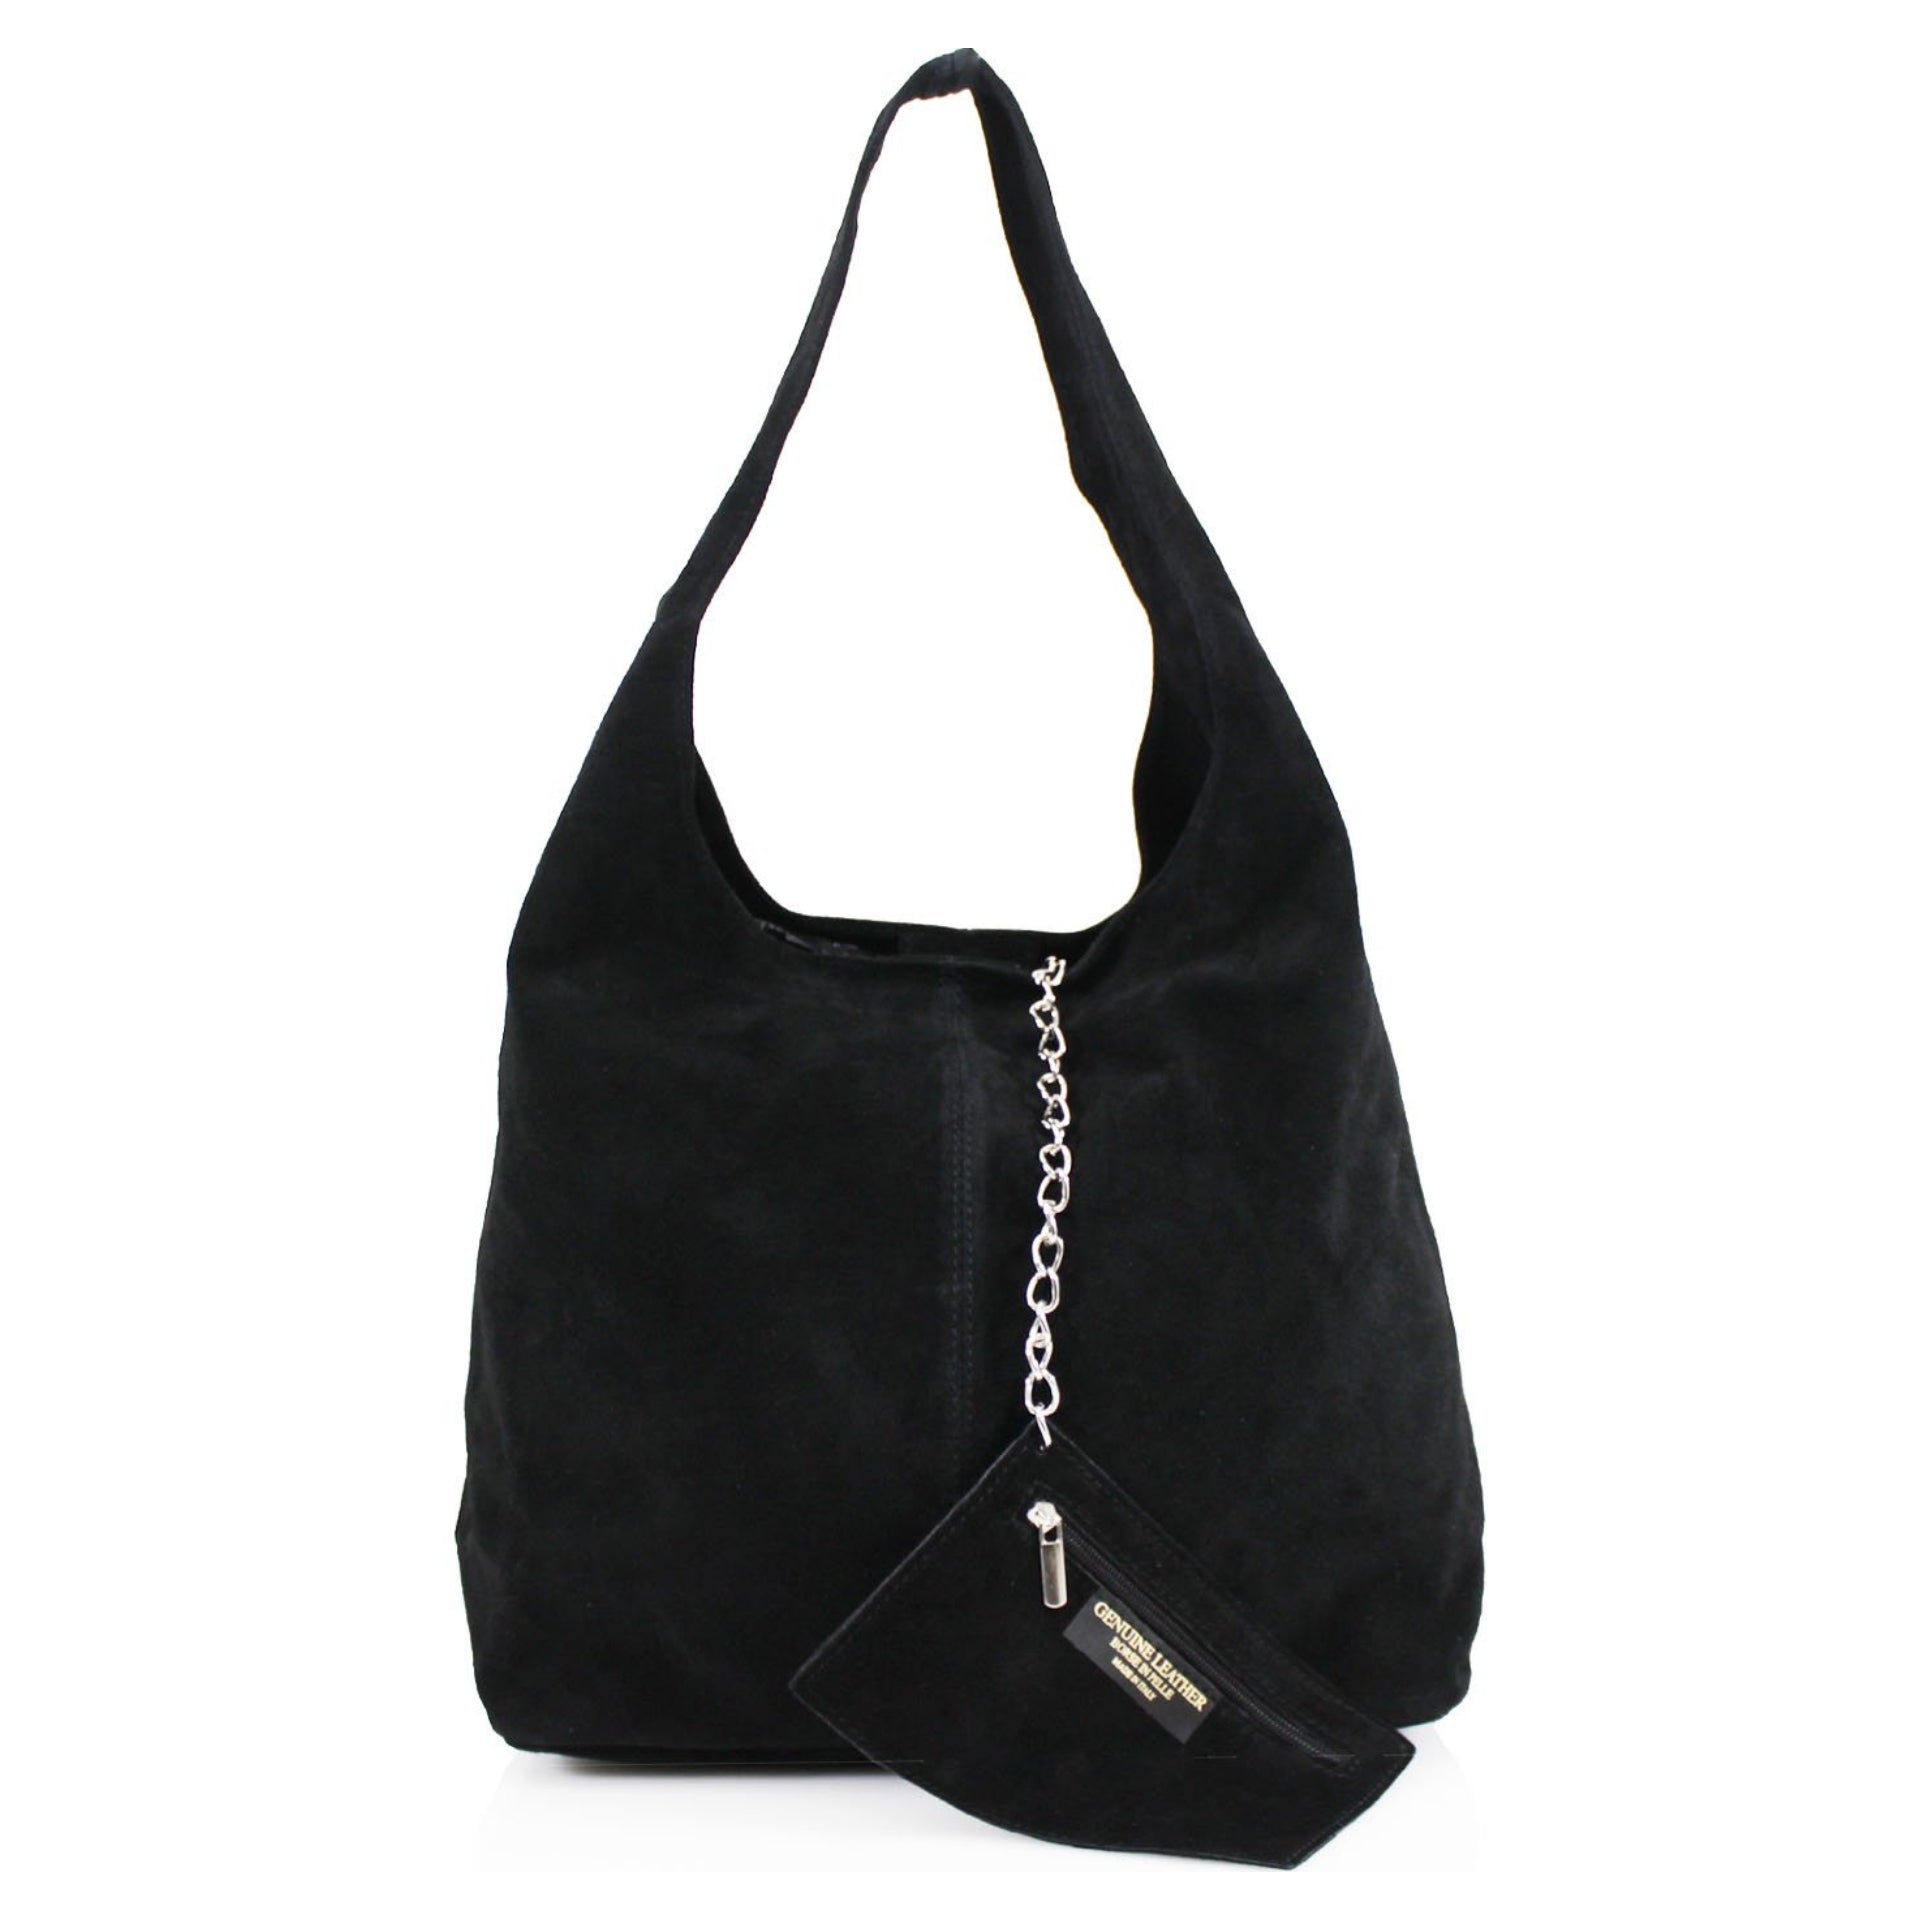 Bag Organizer for Le 5 A 7 Hobo Bag | Bag Insert for Shoulder Bag | Felt Bag Organizer for Handbag Bag